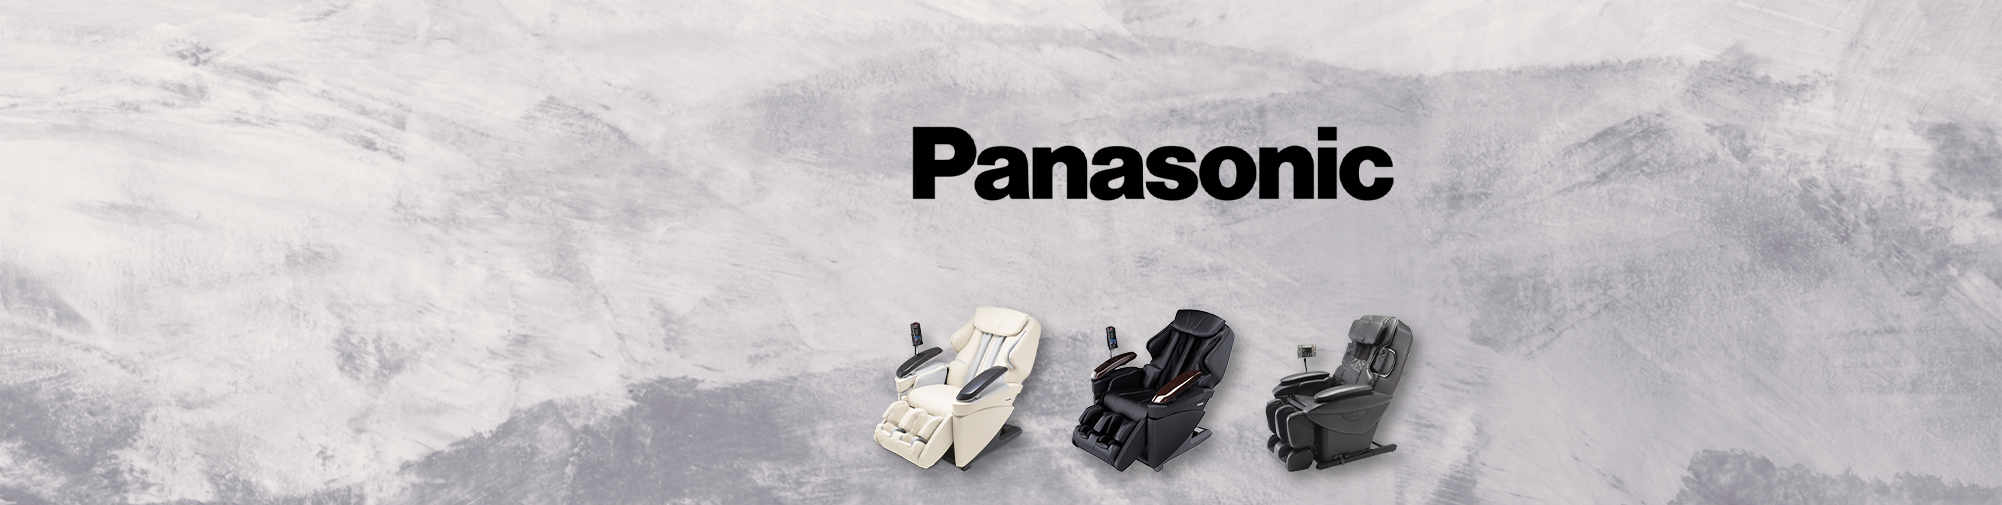 Panasonic masaj koltuğu-masaj koltuğu dünyası